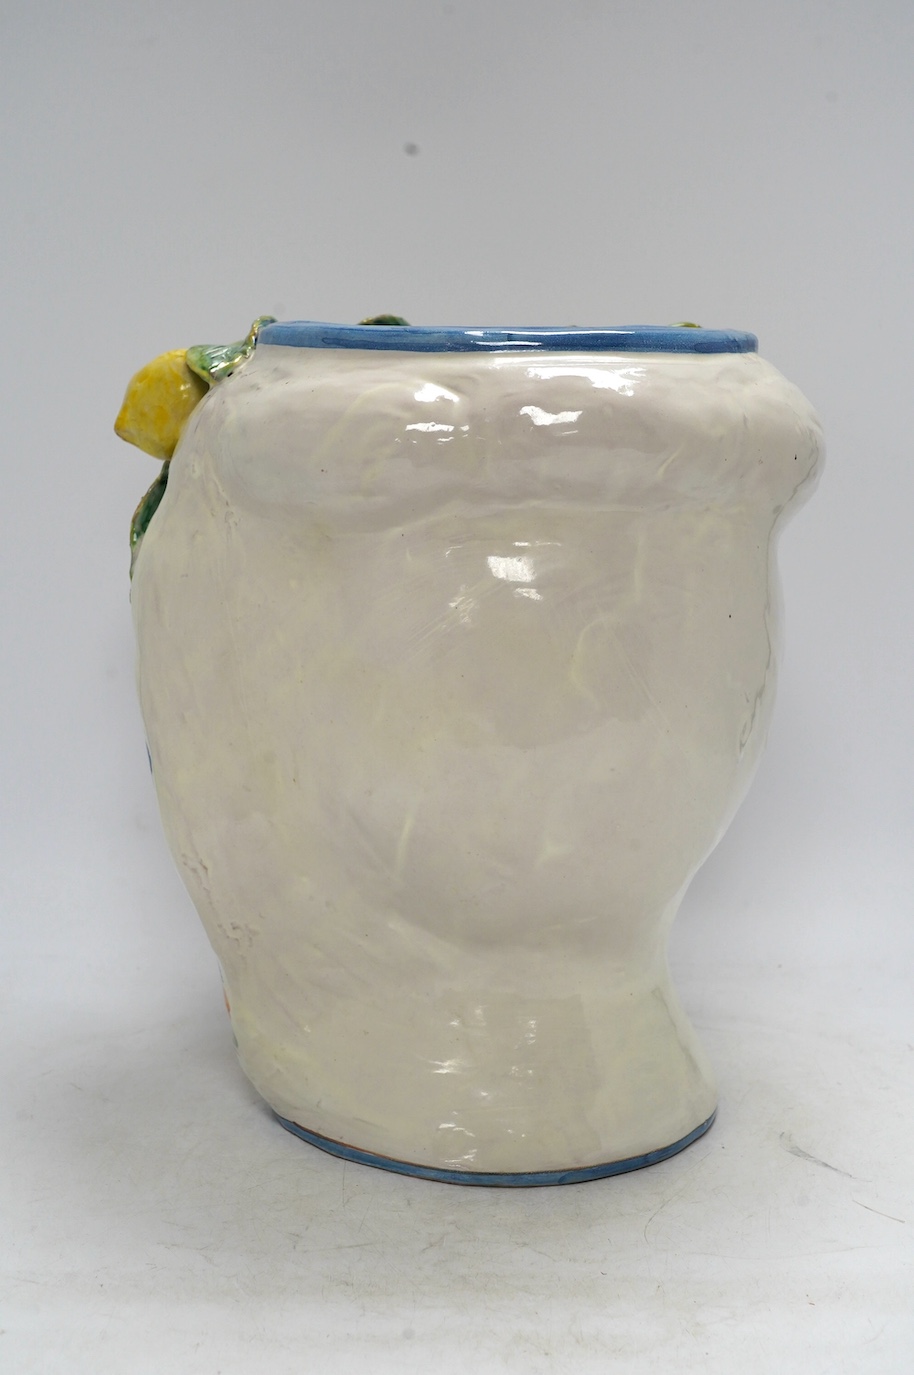 An Agata Treasures 'The Lemon lady' vase, height 31cm. Condition - good